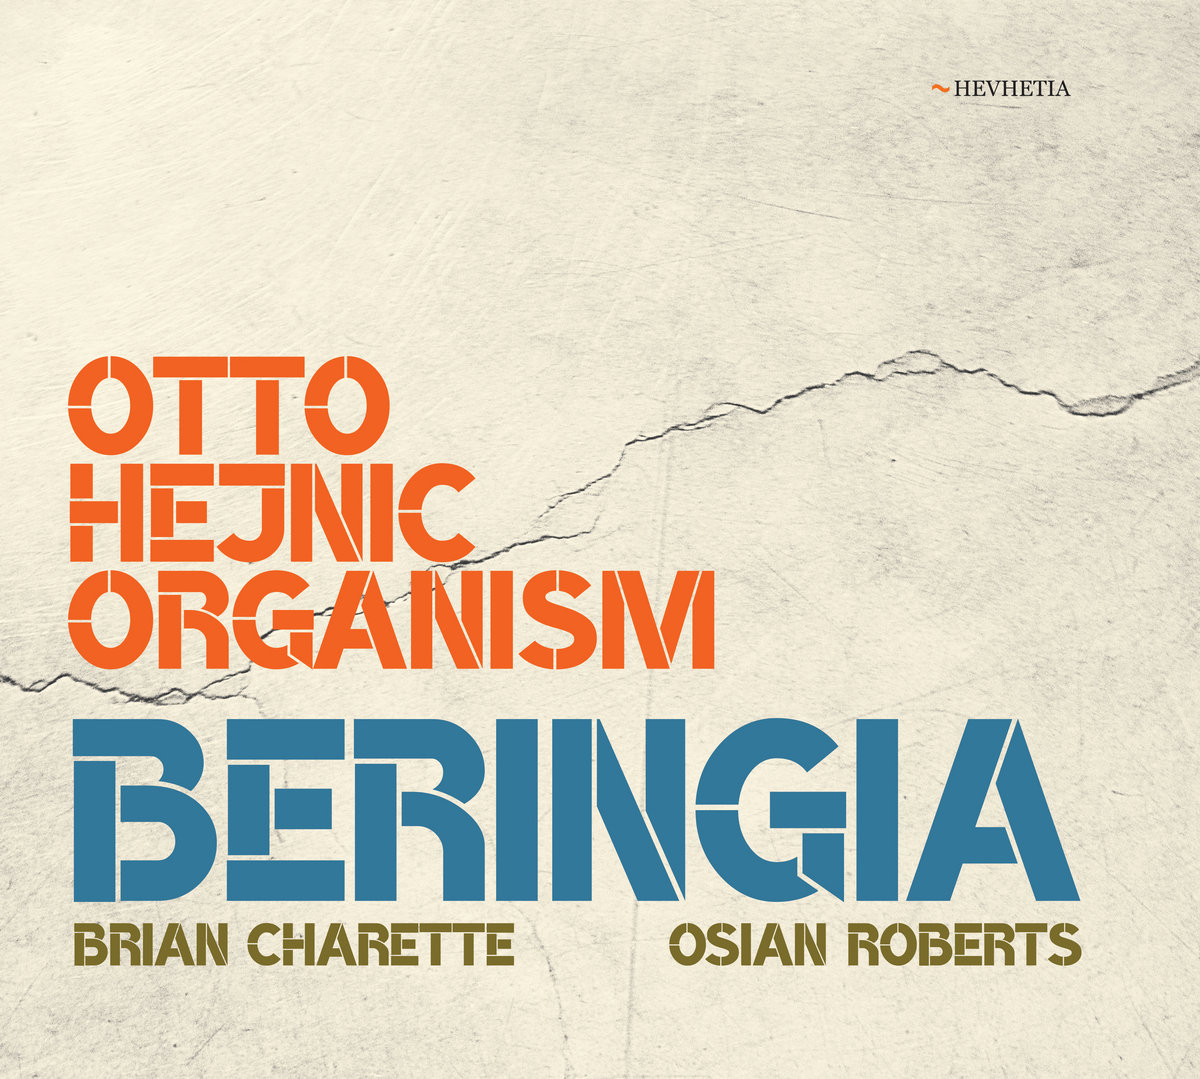 OTTO HEJNIC ORGANISM: Beringia